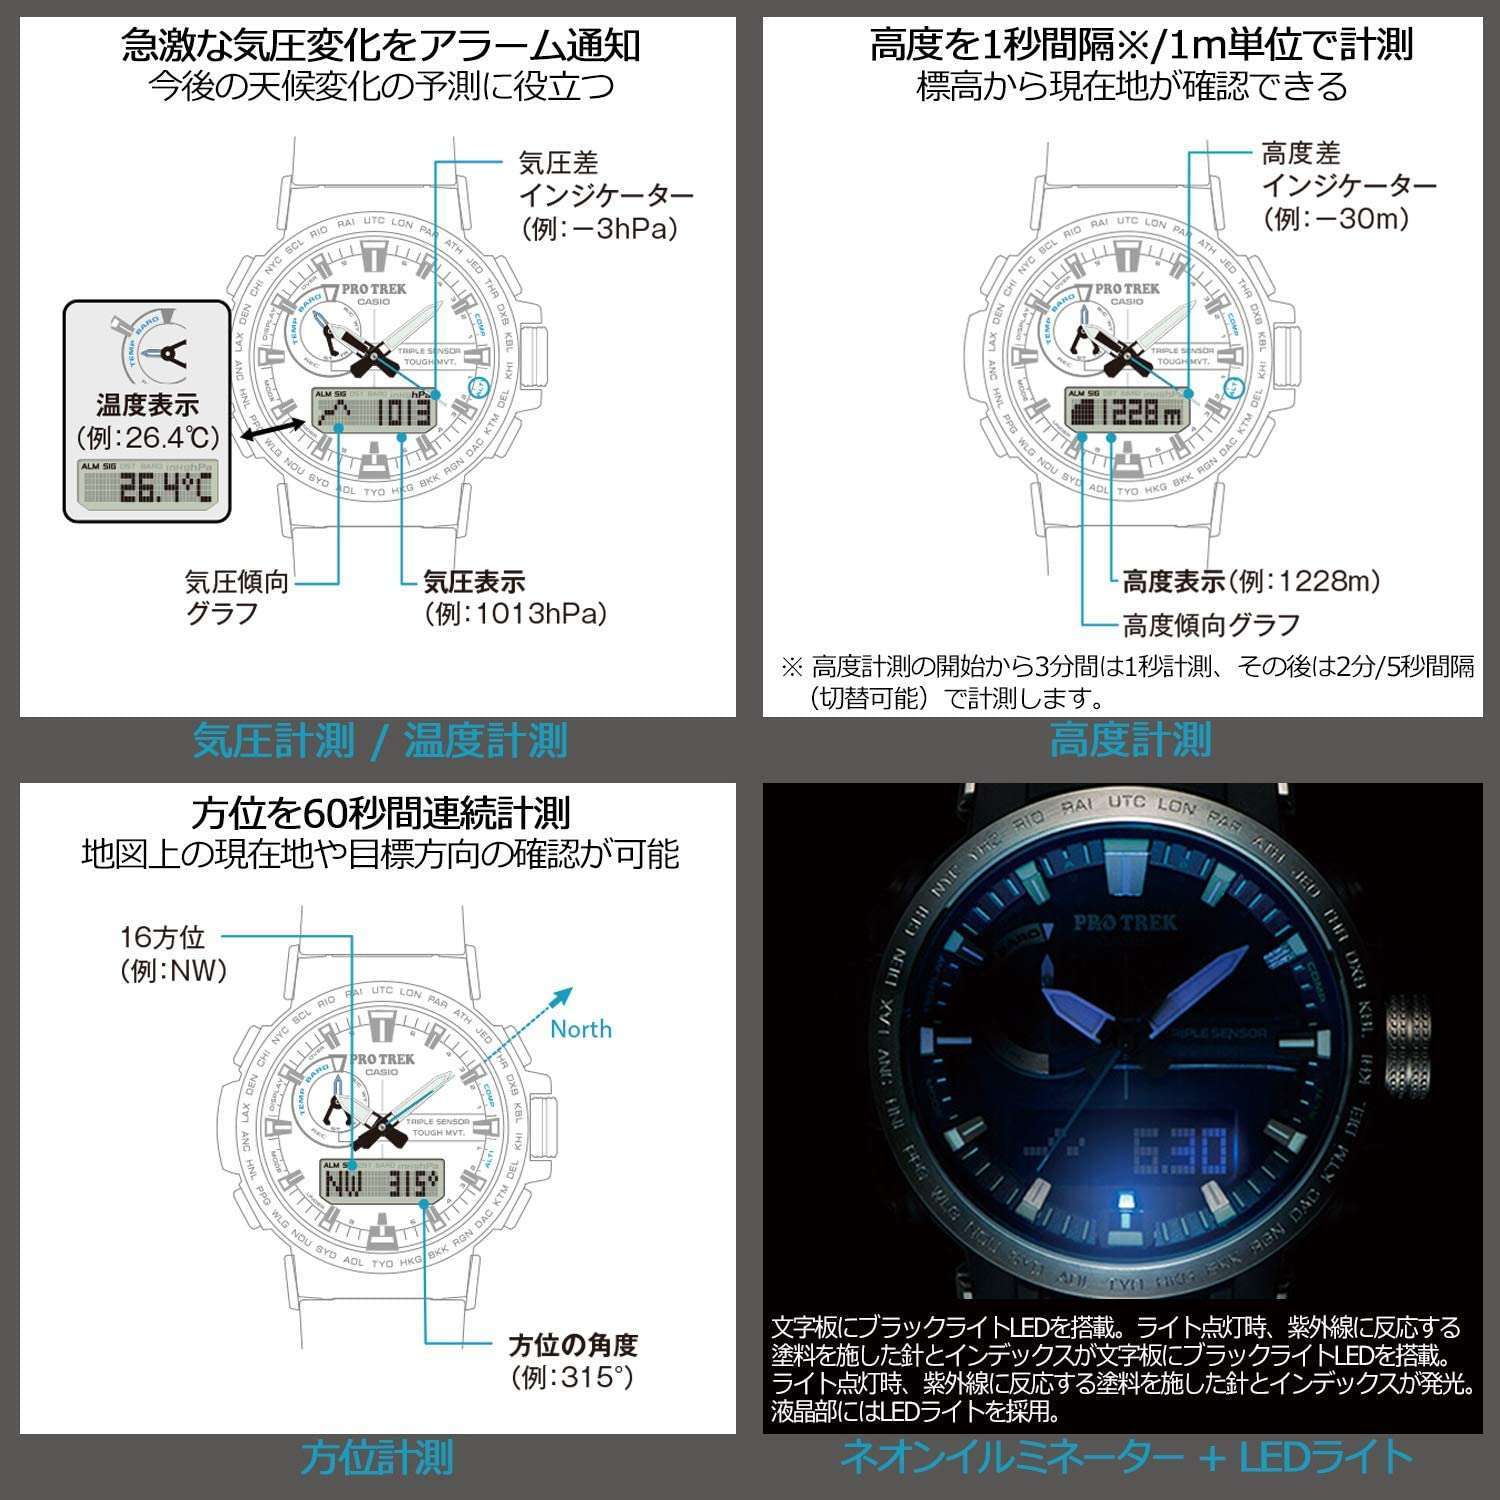 ROOK JAPAN:CASIO PROTREK CLIMBER LINE JDM MEN WATCH PRW-60T-7AJF,JDM Watch,Casio Protrek